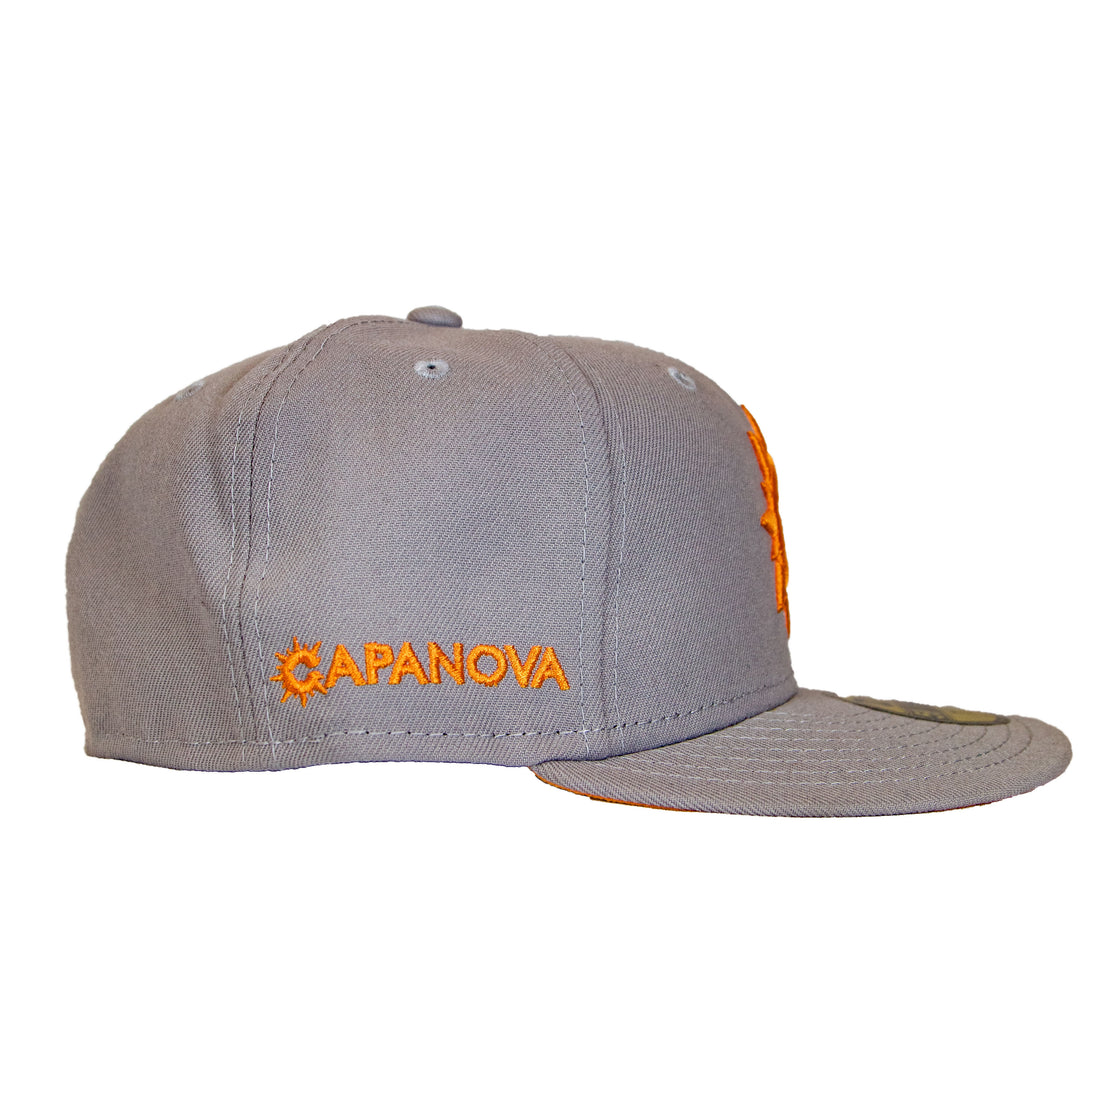 New Era Capanova Capsule 59FIFTY Fitted - Gray/Orange